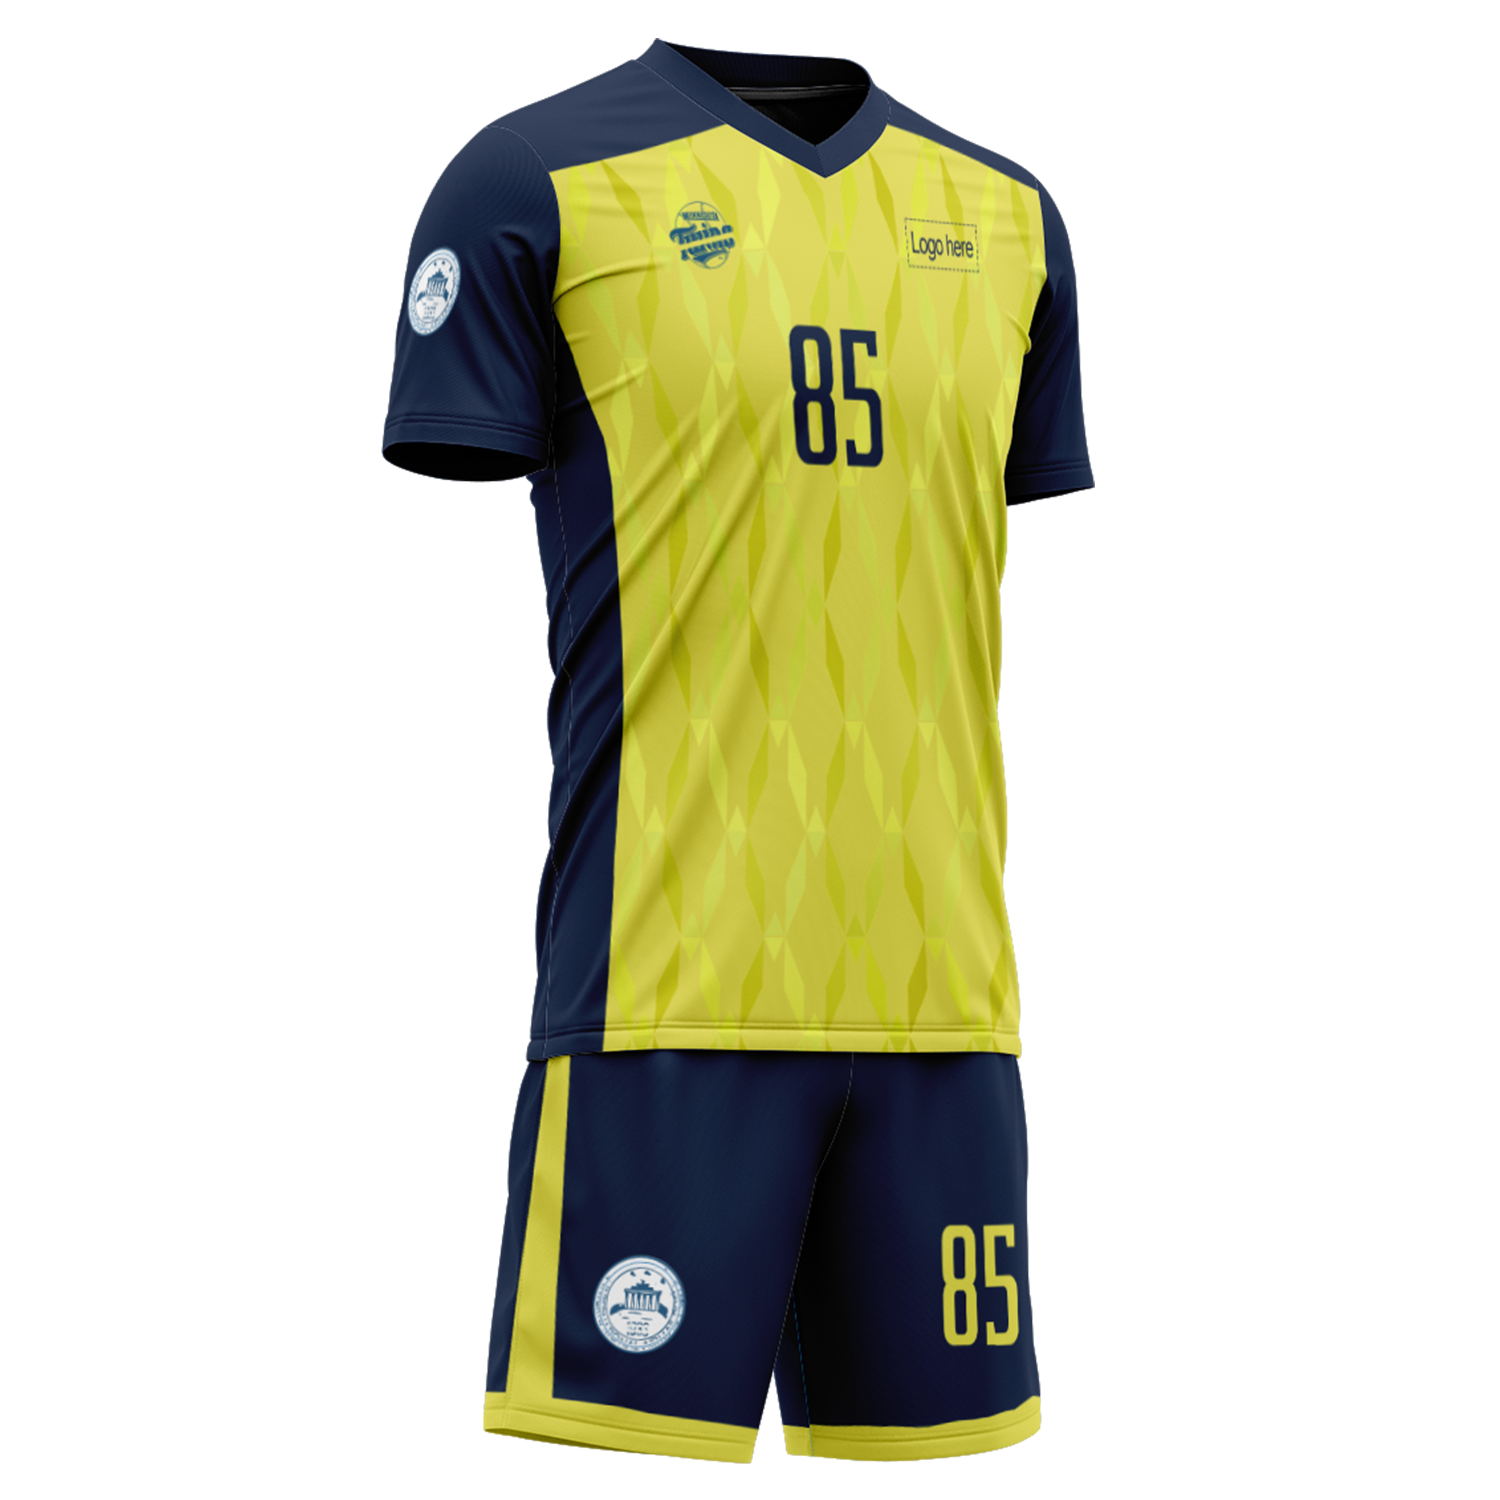 Custom Ecuador Team Football Suits Personalized Design Print on Demand Soccer Jerseys